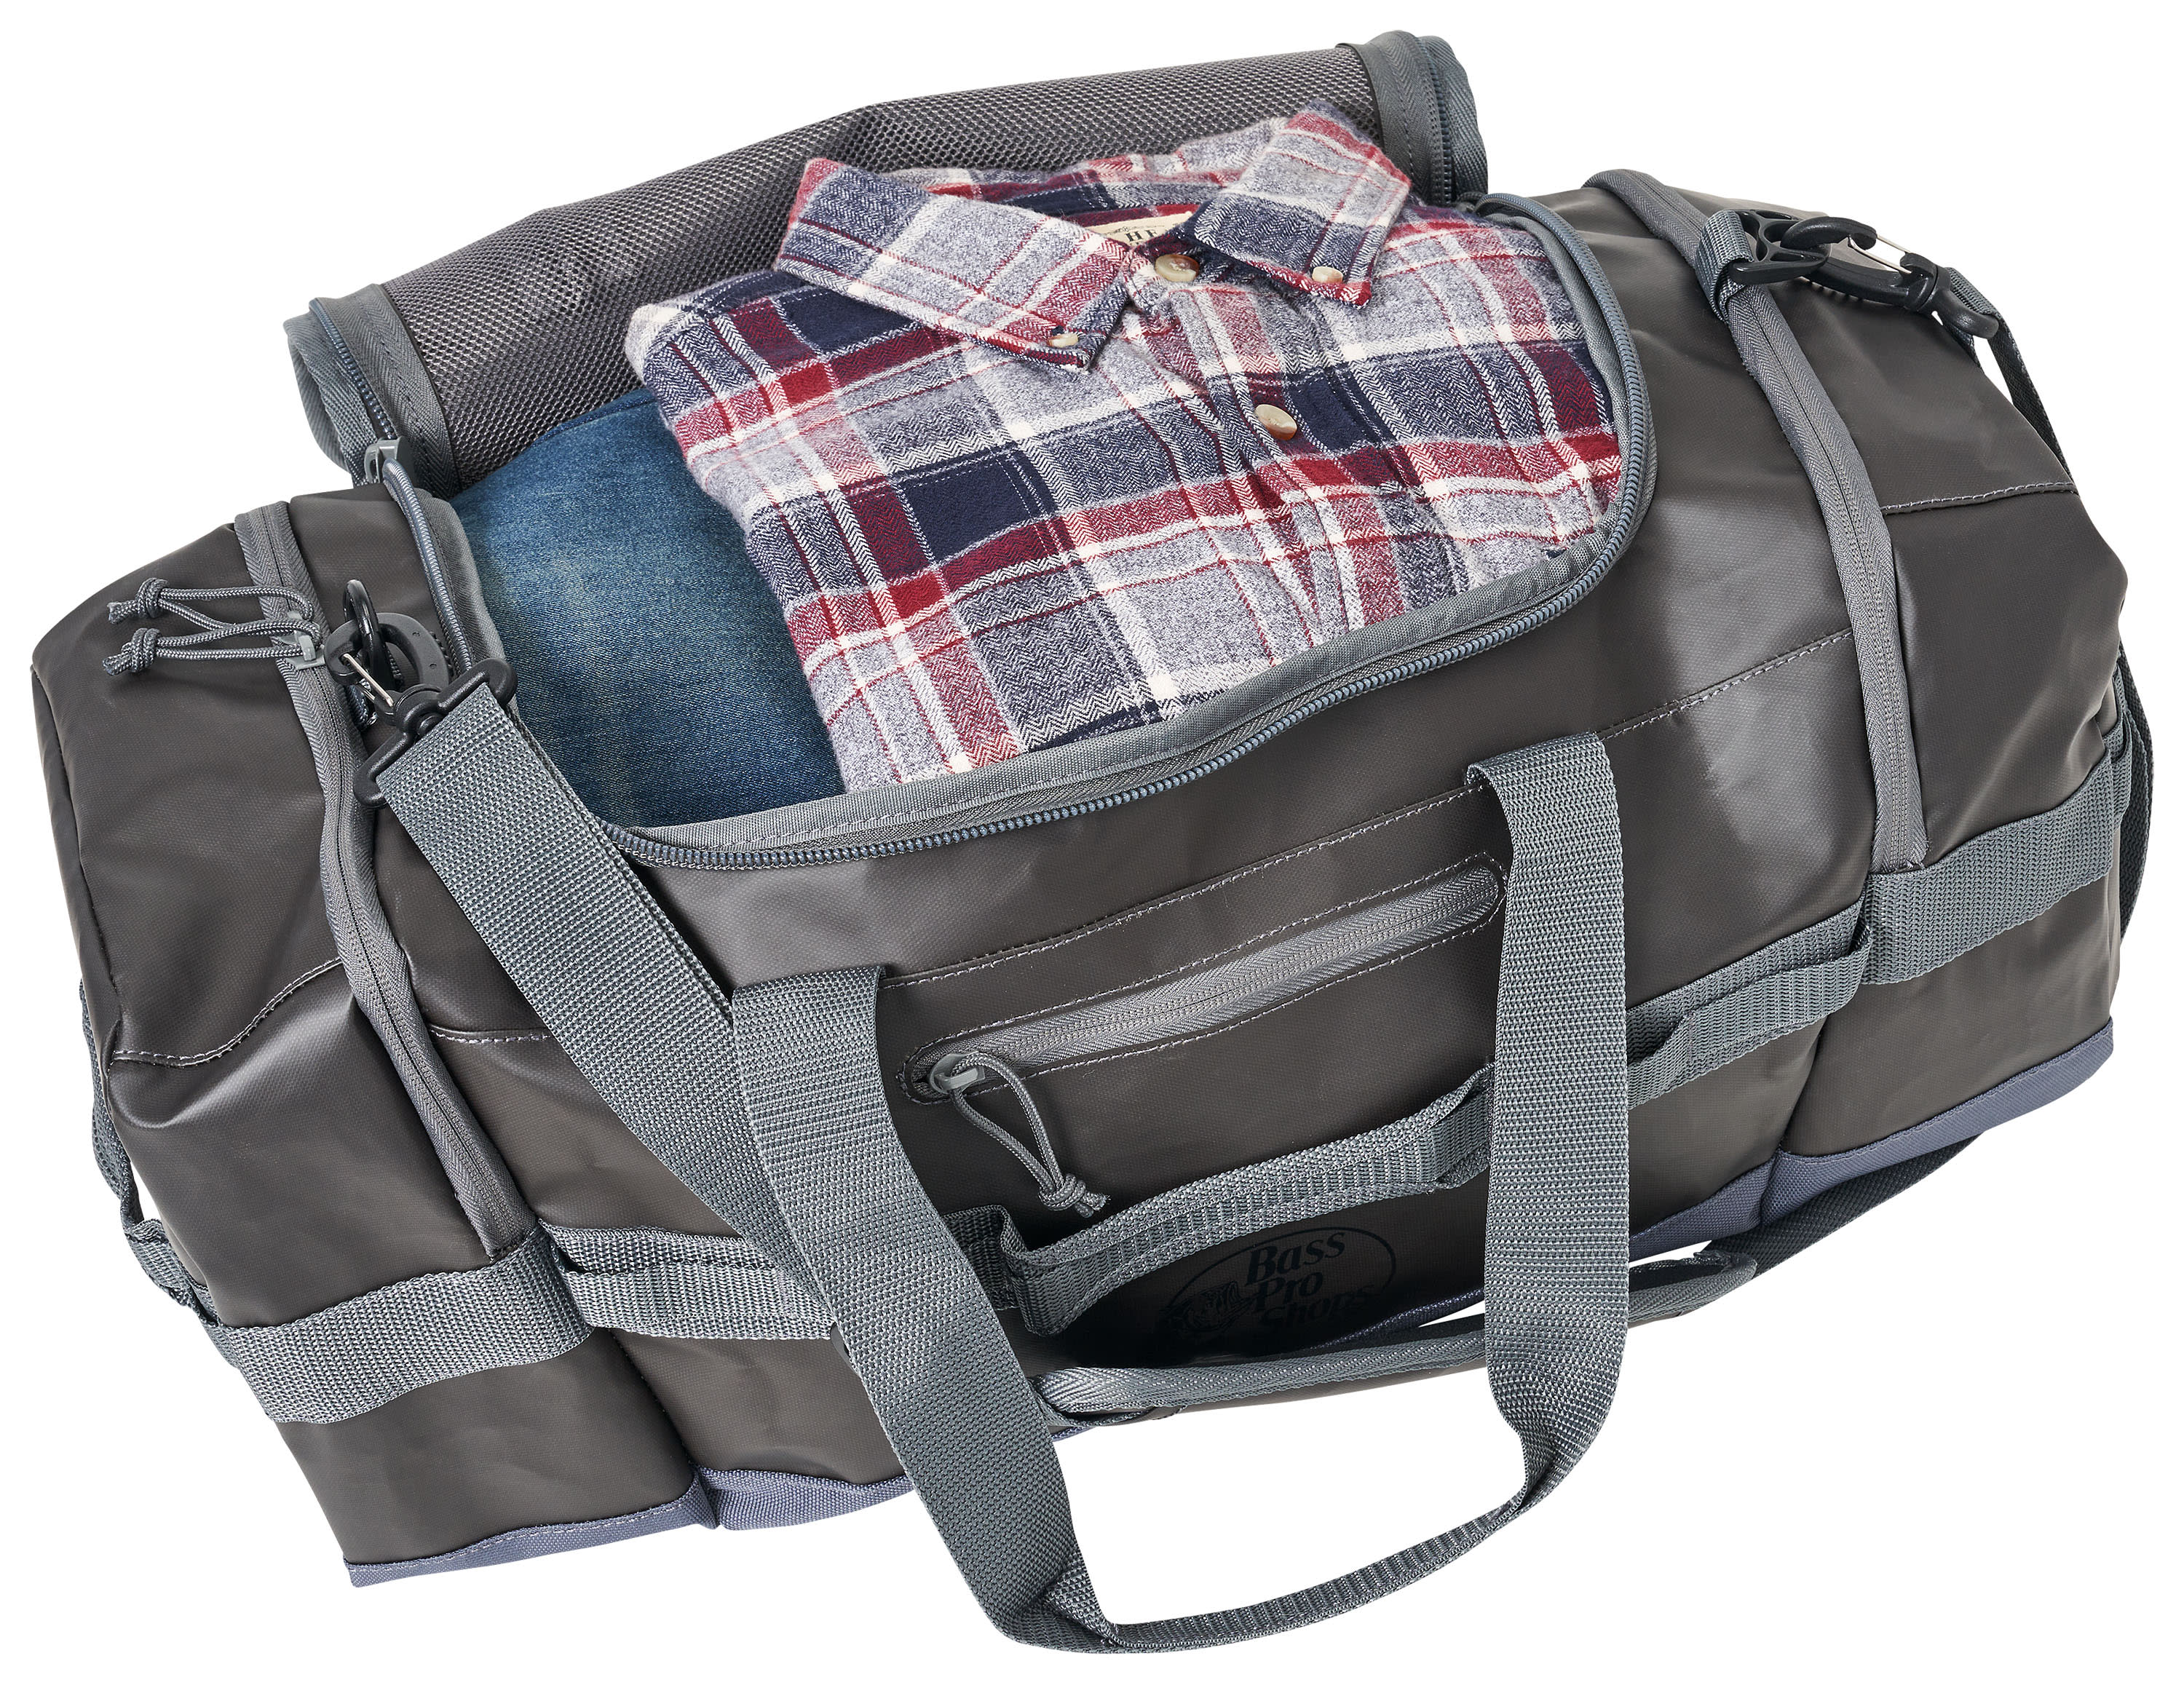 Bass Pro Shops® Heavy-Duty Packable Duffel Bag - 40 Litre - Grey/Black